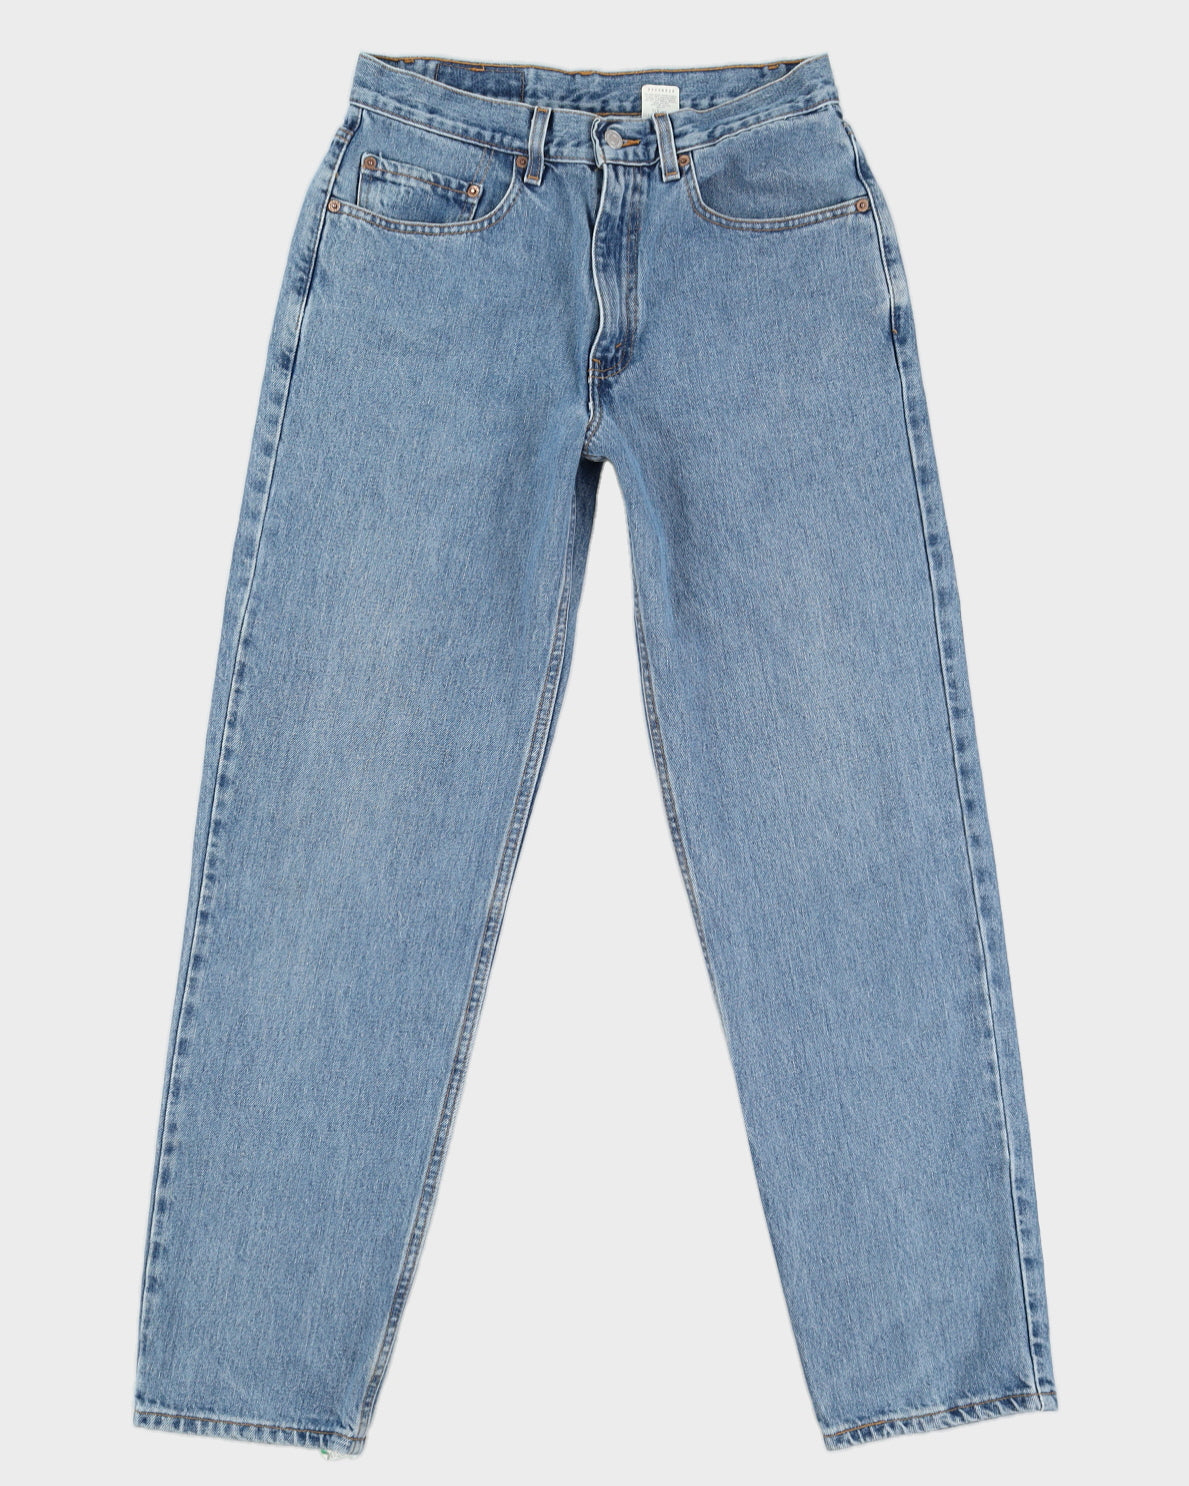 Vintage 90s Levi's 550 Medium Wash Denim Jeans - W32 L32